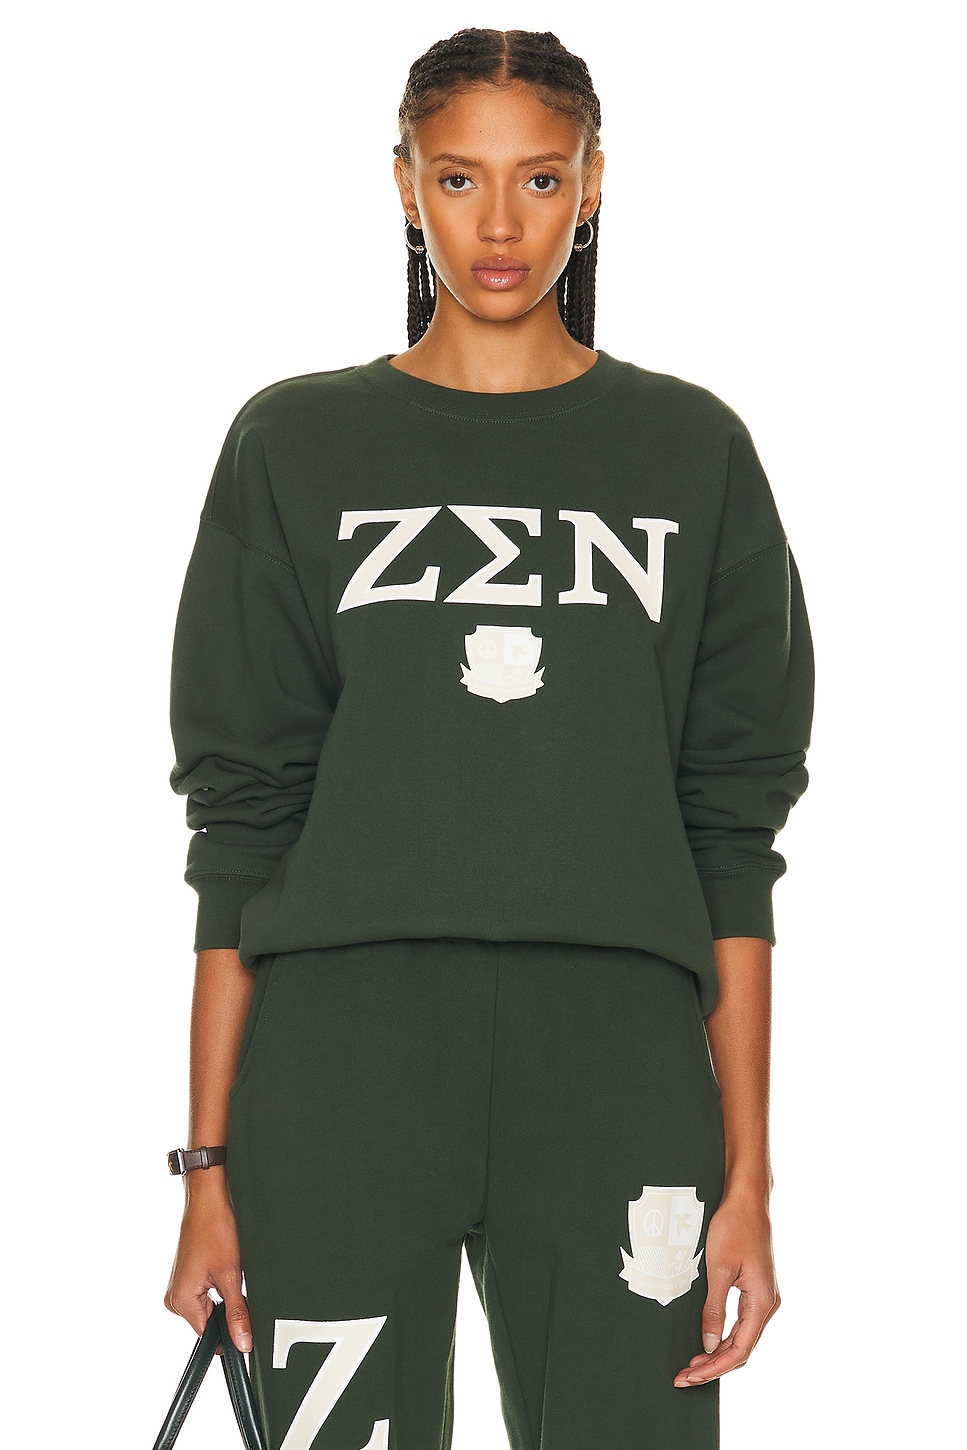 Zen Sweater in Green